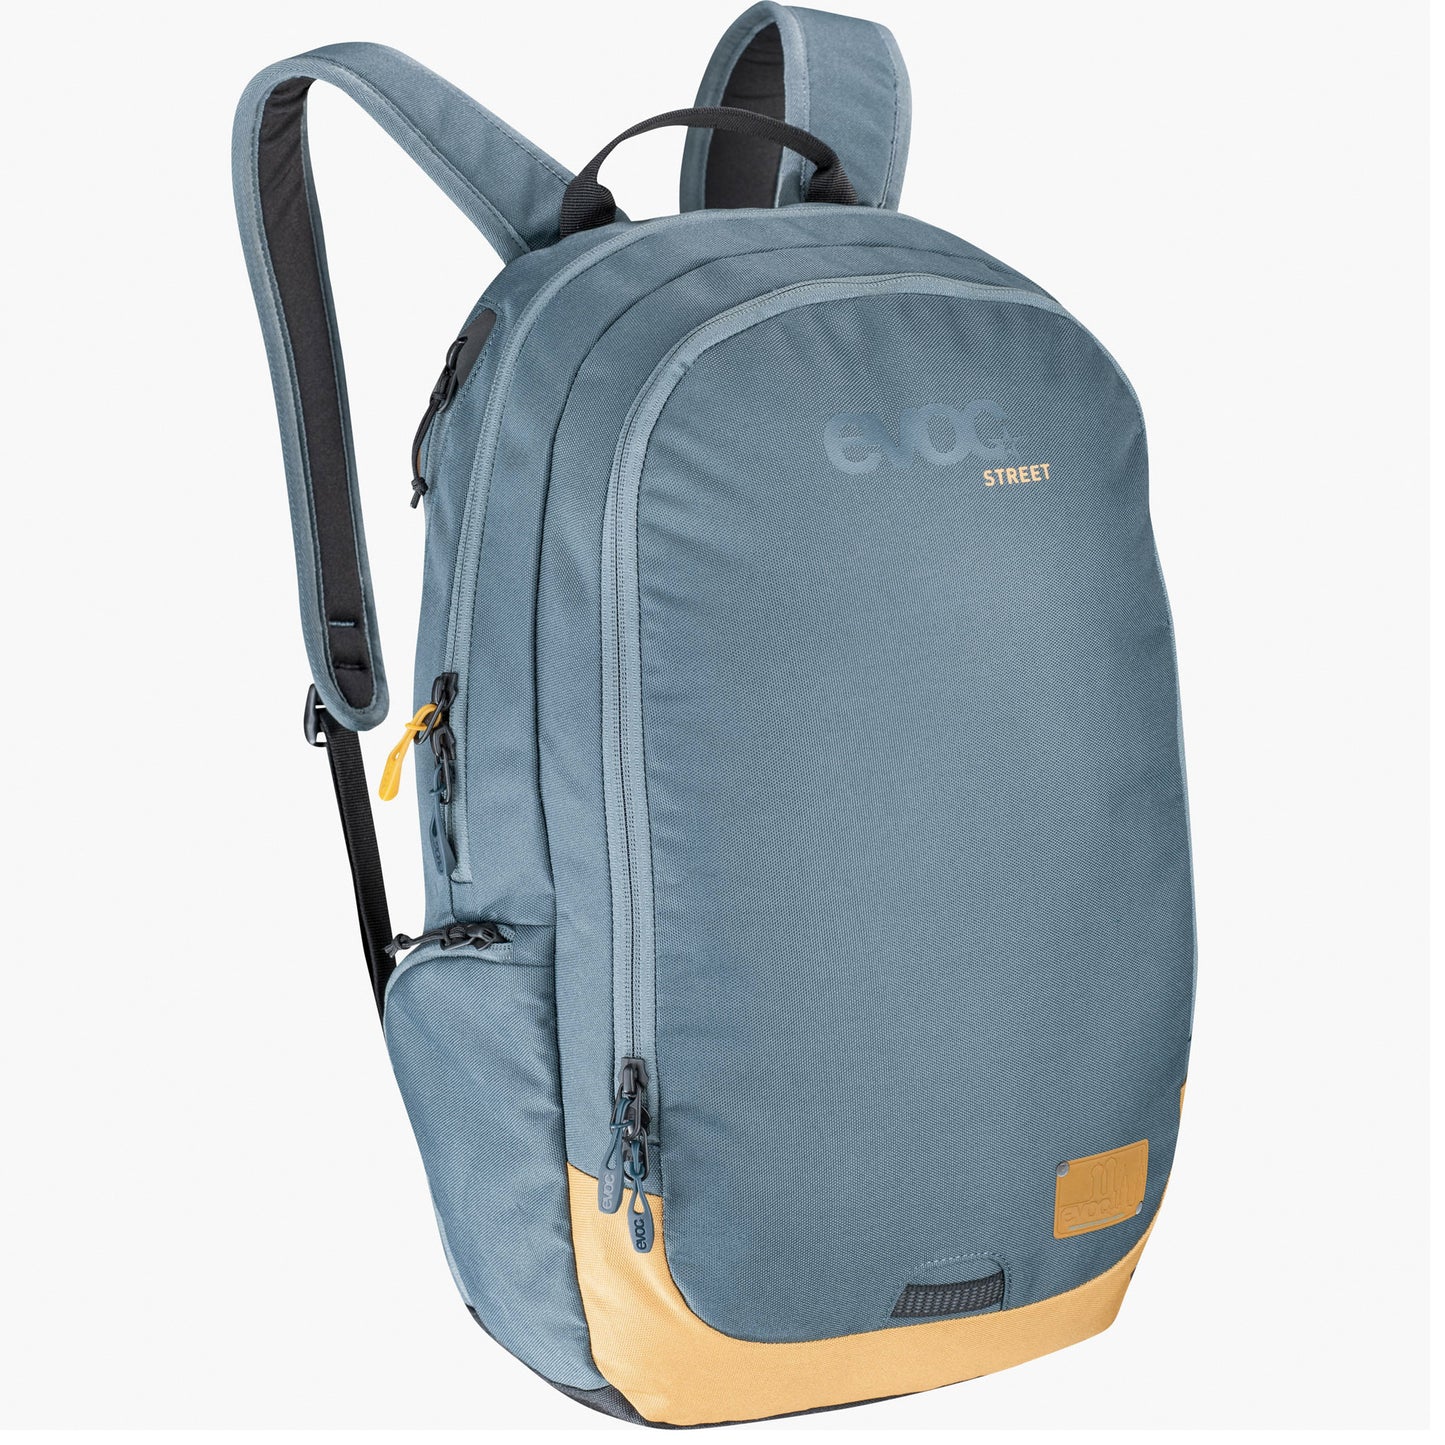 Evoc Street Bag Backpack 25 Litre, Slate, buy online at Woolys Wheels with free delivery